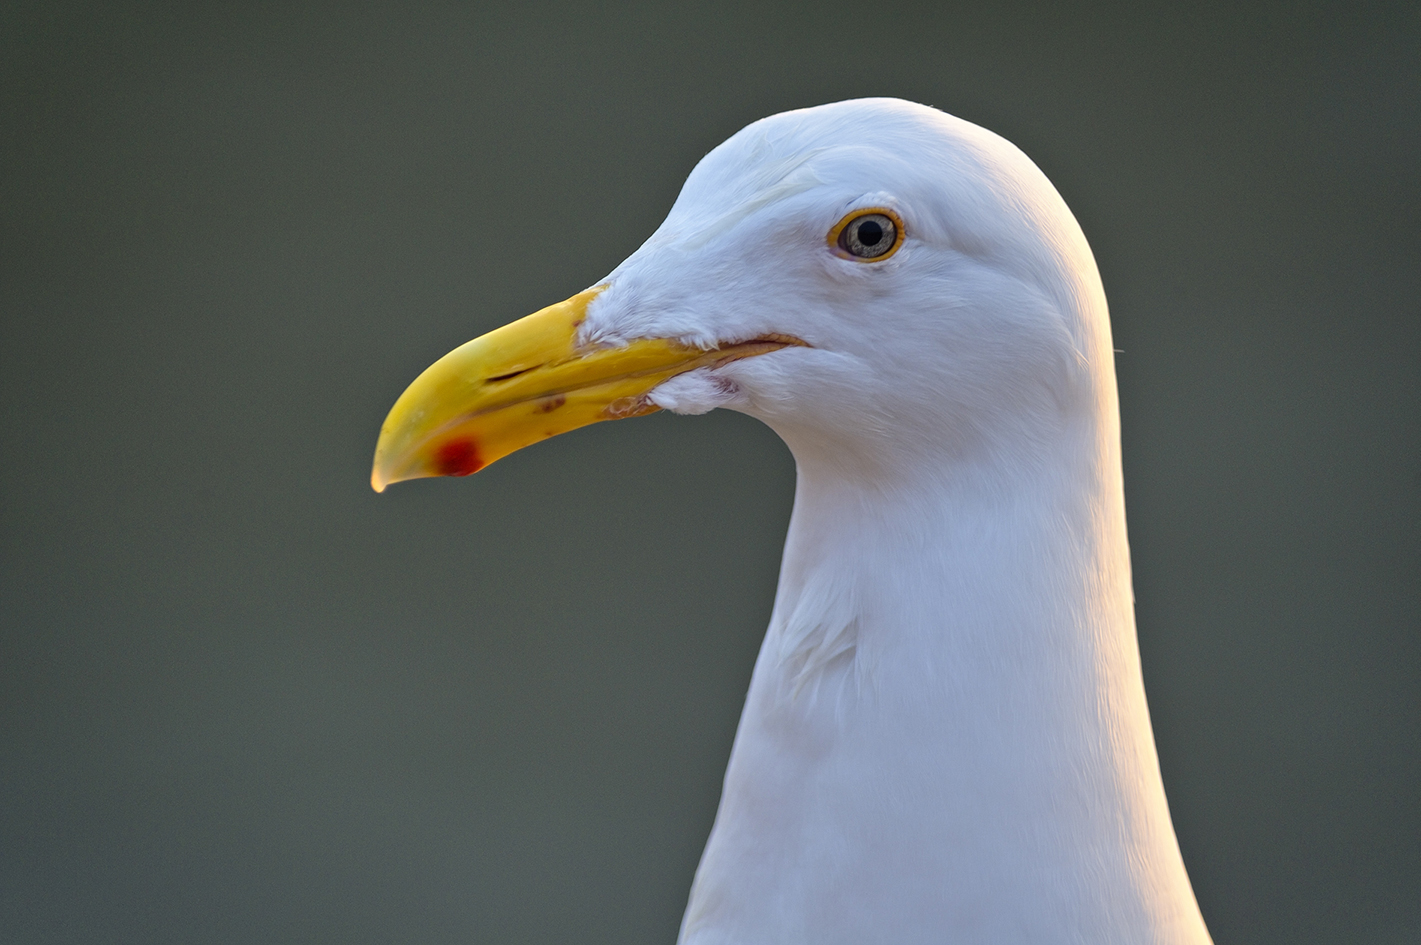 Portrait of a Gull